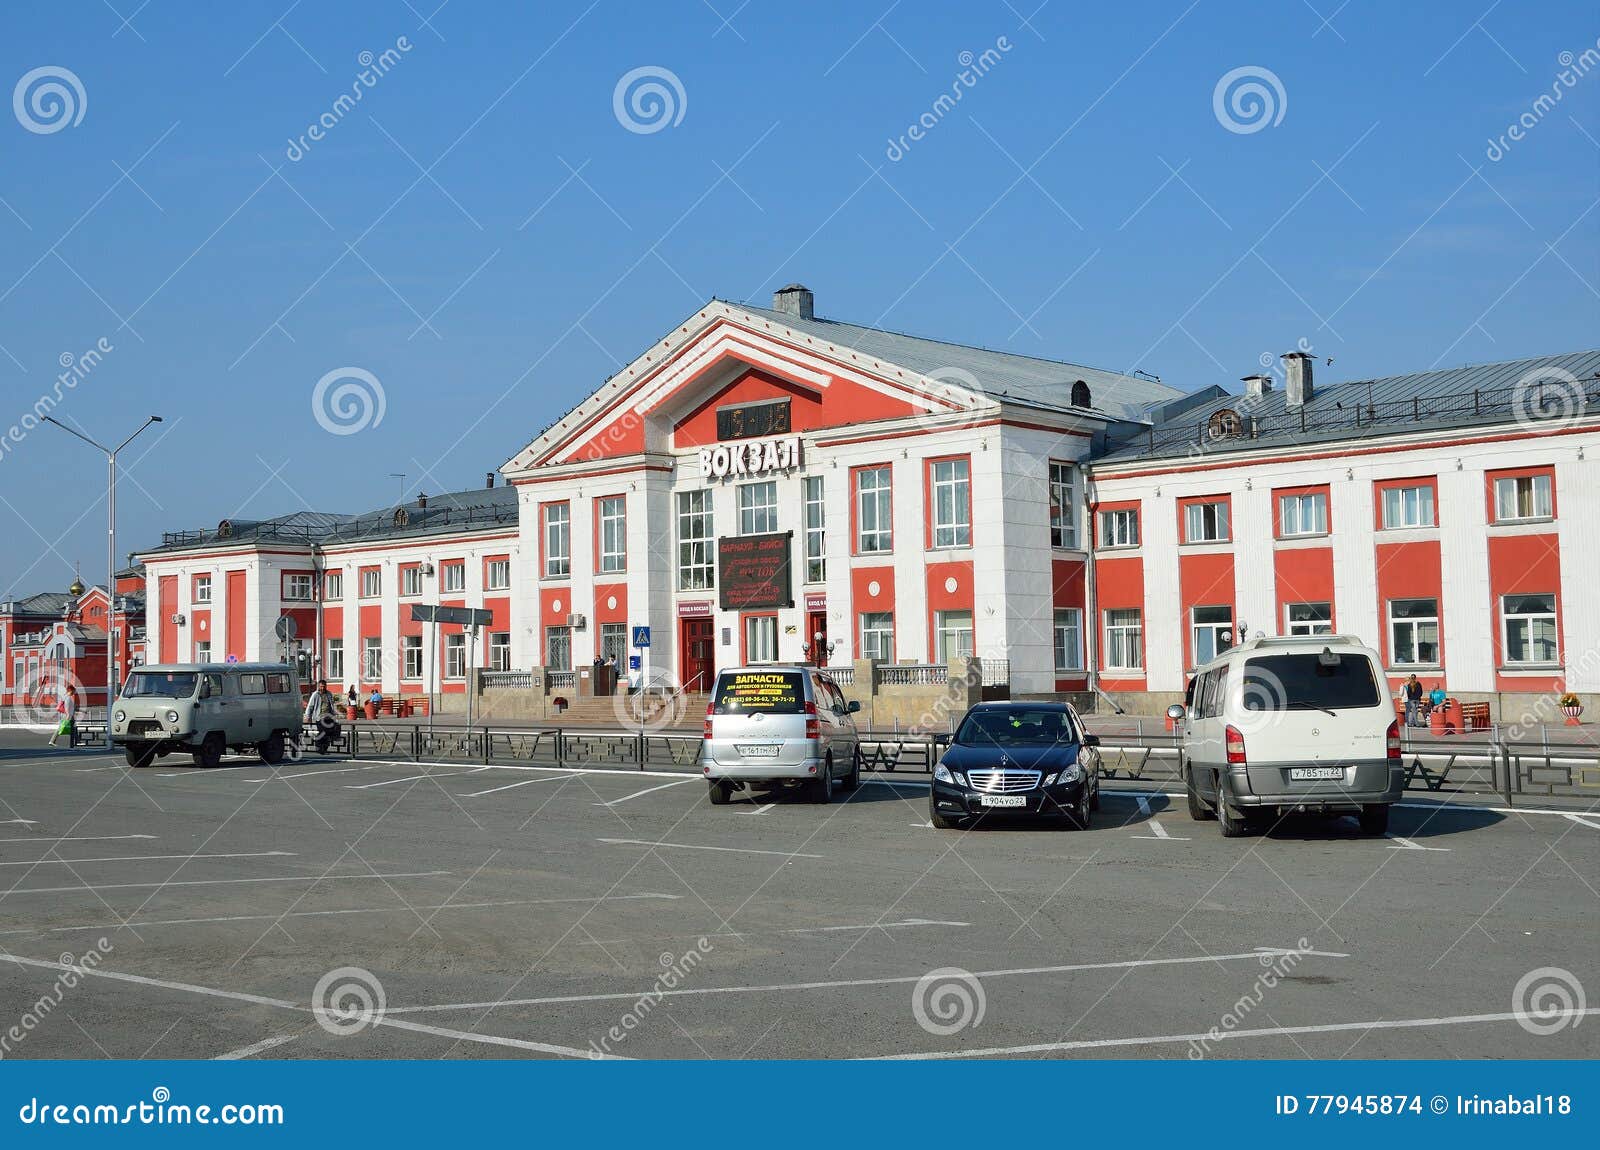 Жд вокзал барнаул телефон. Вокзал Барнаул. ЖД вокзал Барнаул. Железнодорожный вокзал Барнаул фото. Старый Железнодорожный вокзал (Барнаул).